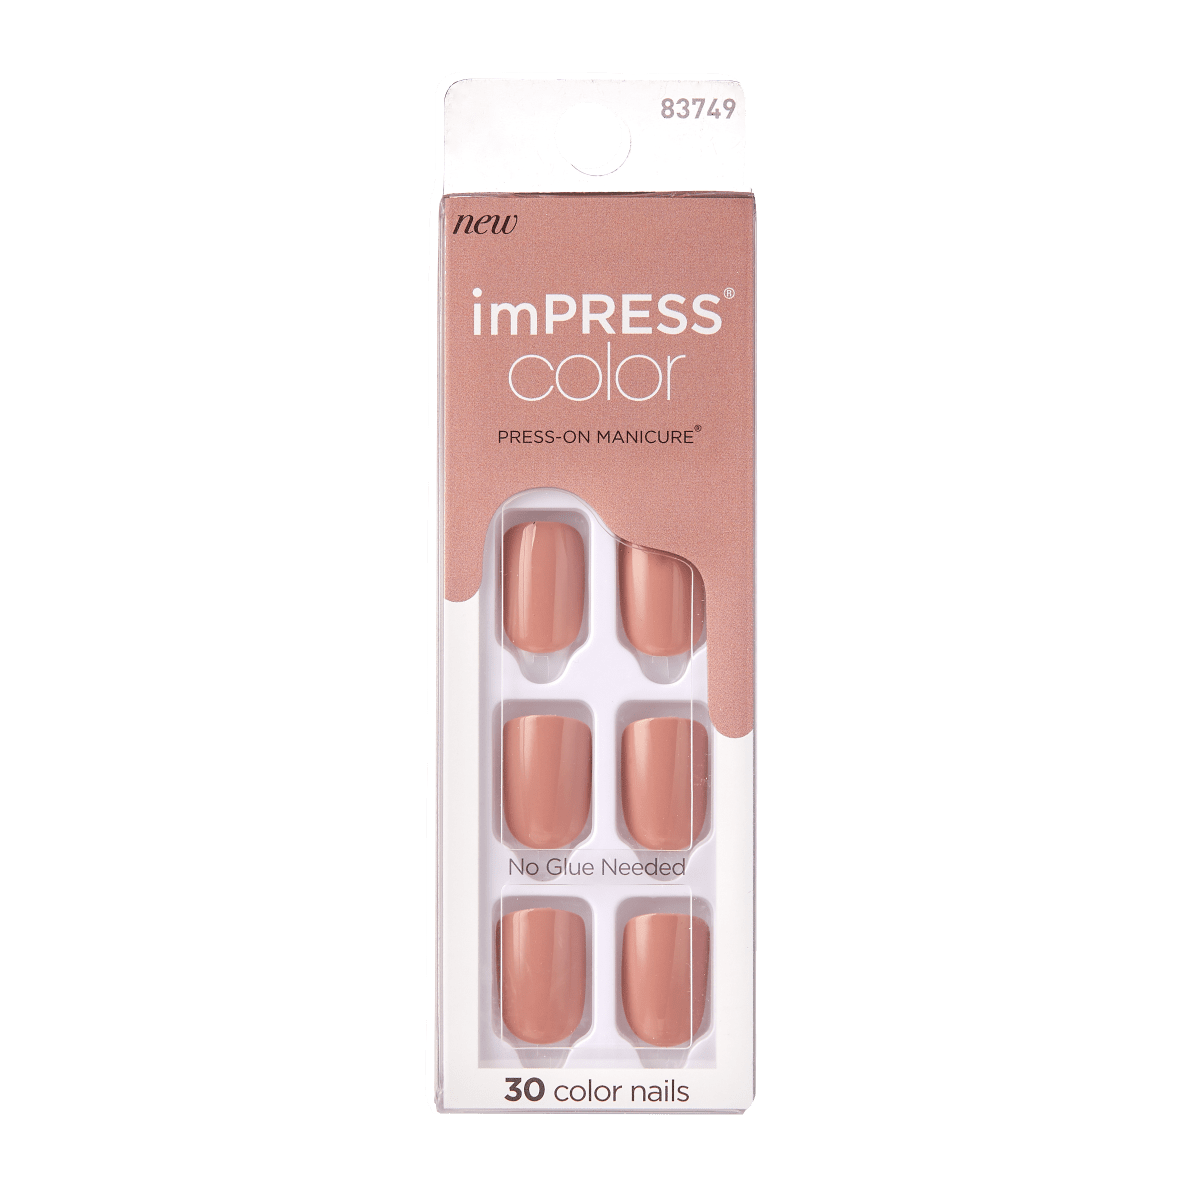 imPRESS Color Press-On Manicure - Sandbox